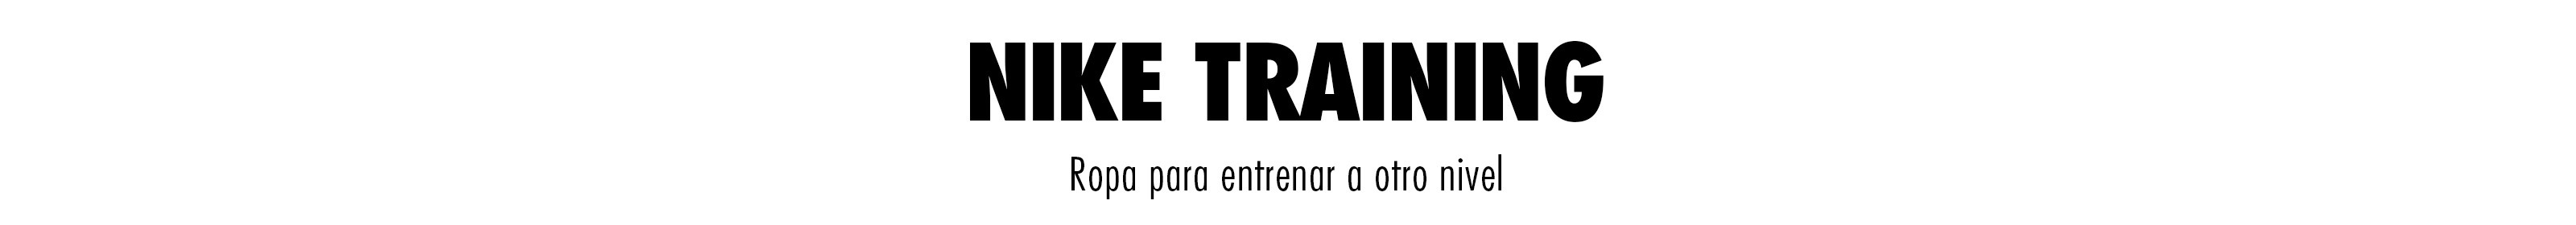 Training_mujer